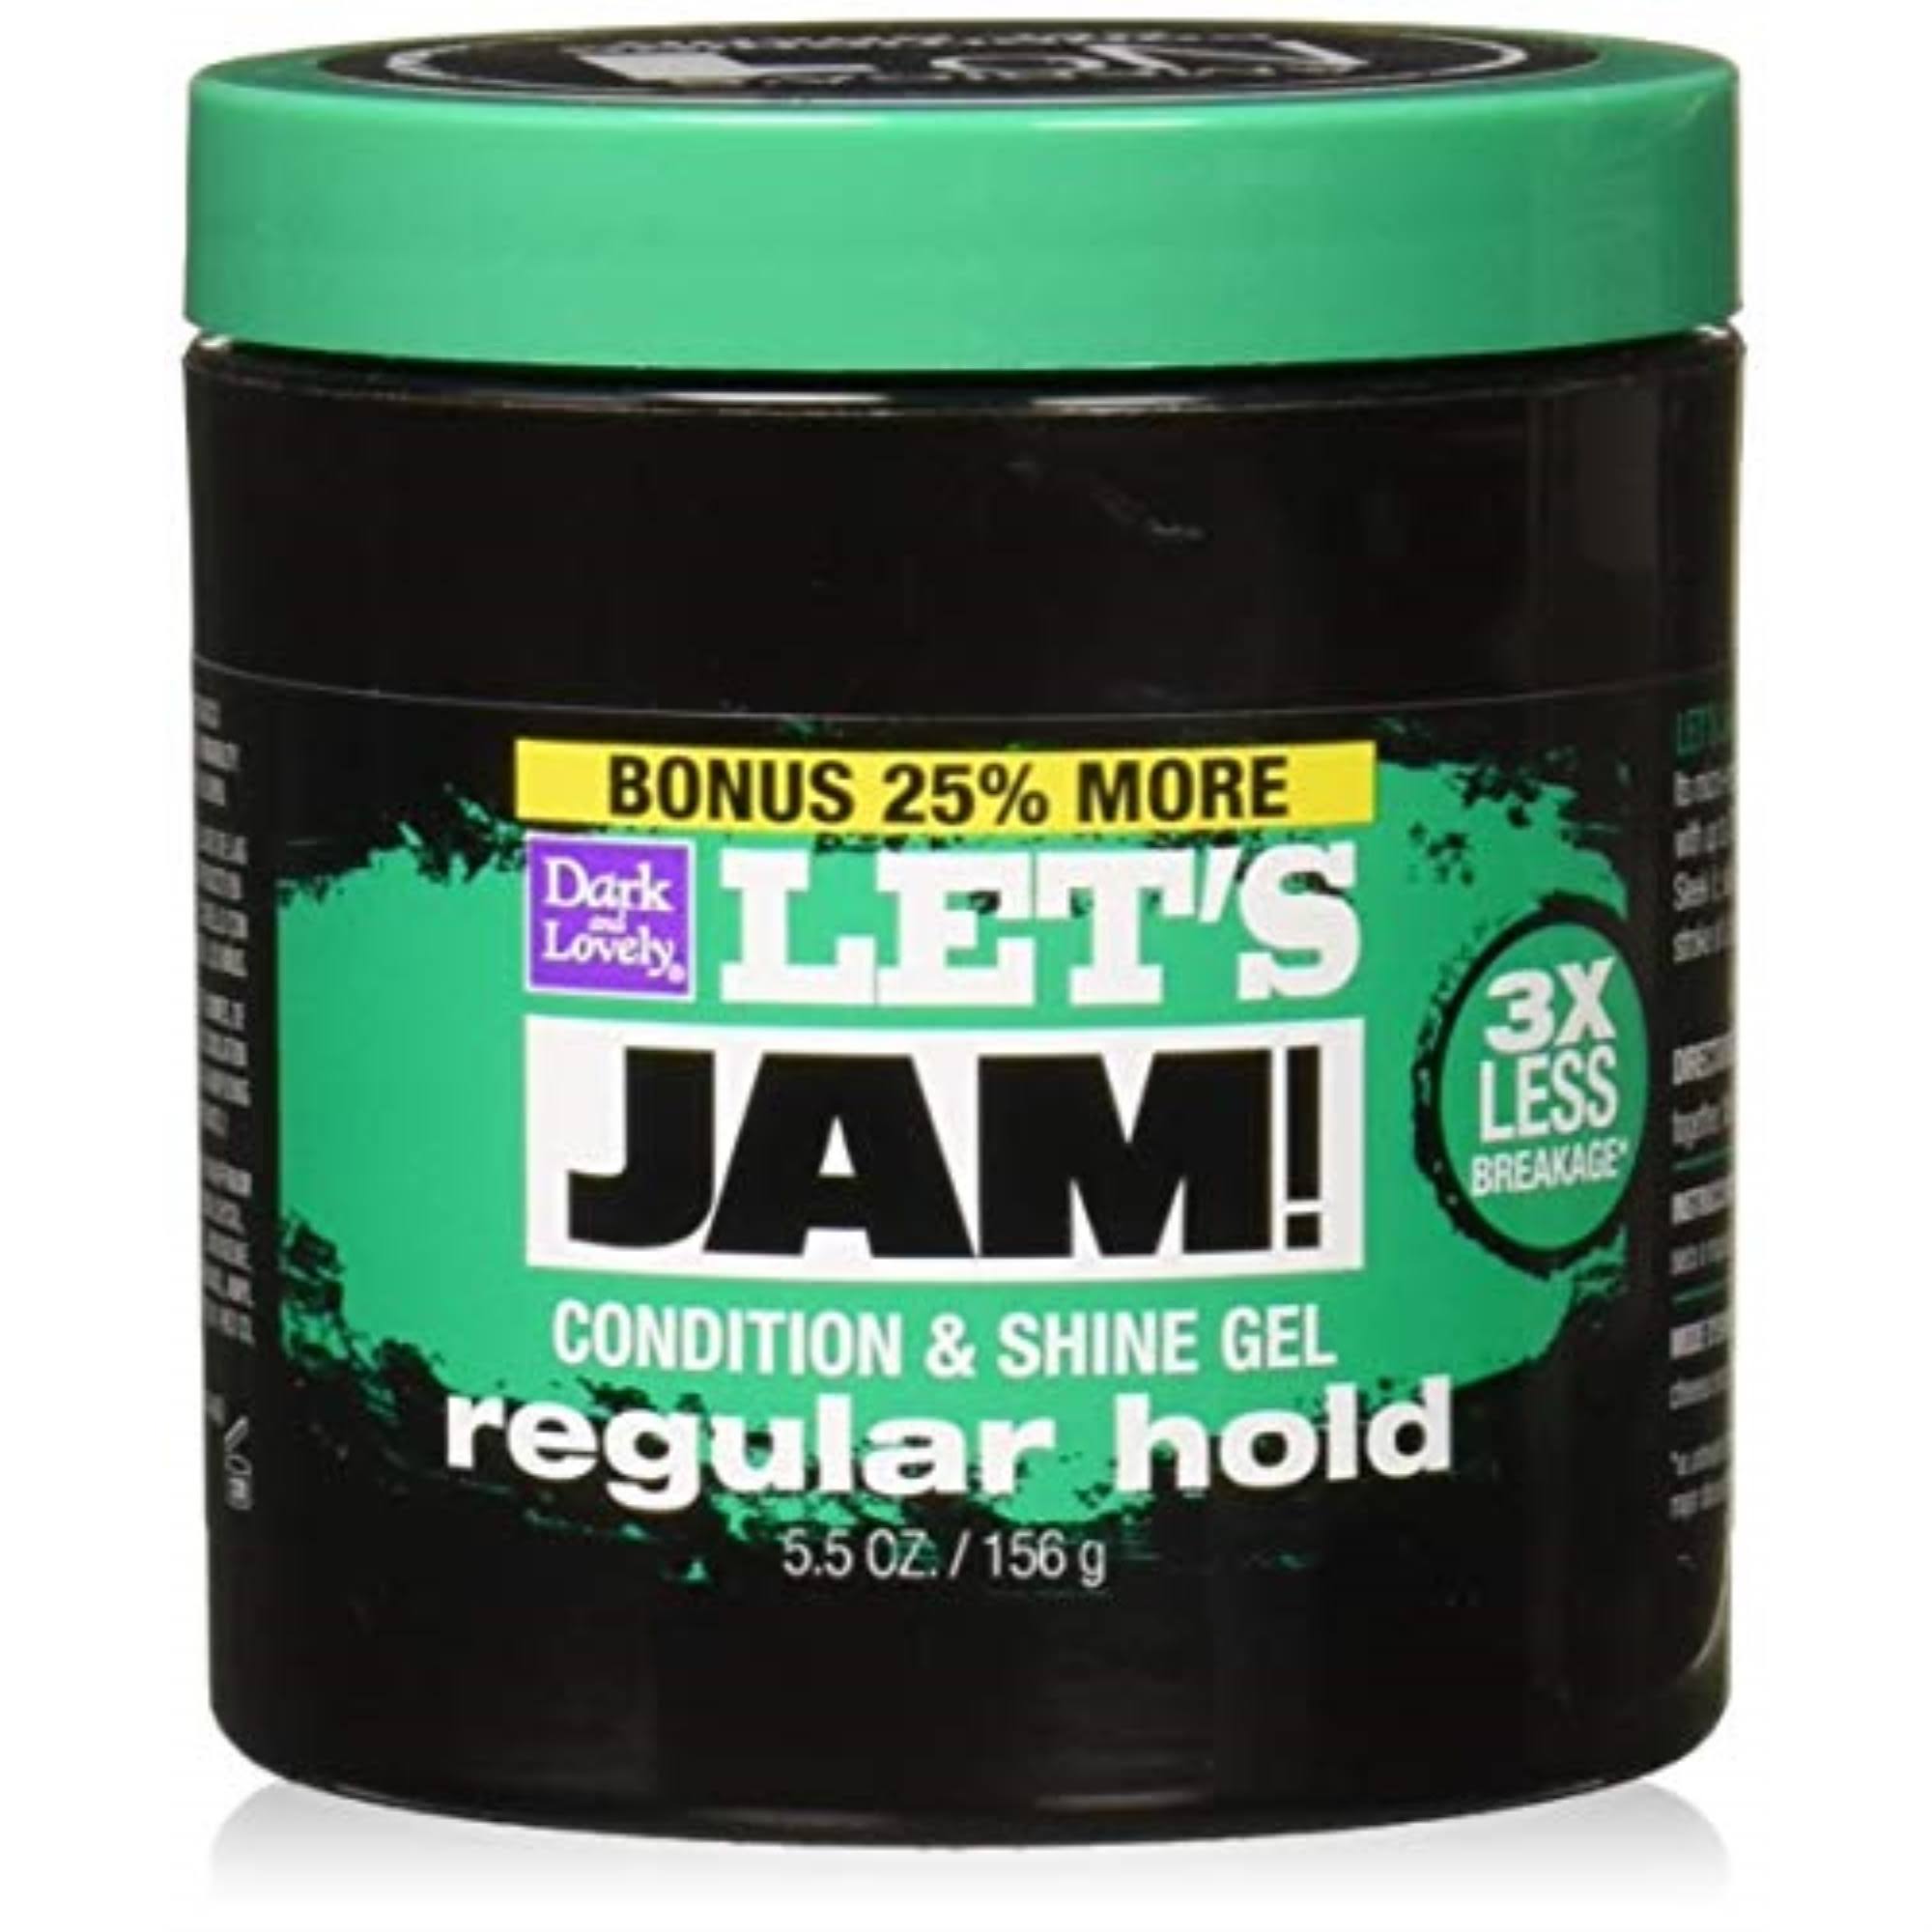 Let's Jam Shining & Conditioning Gel - Regular Hold